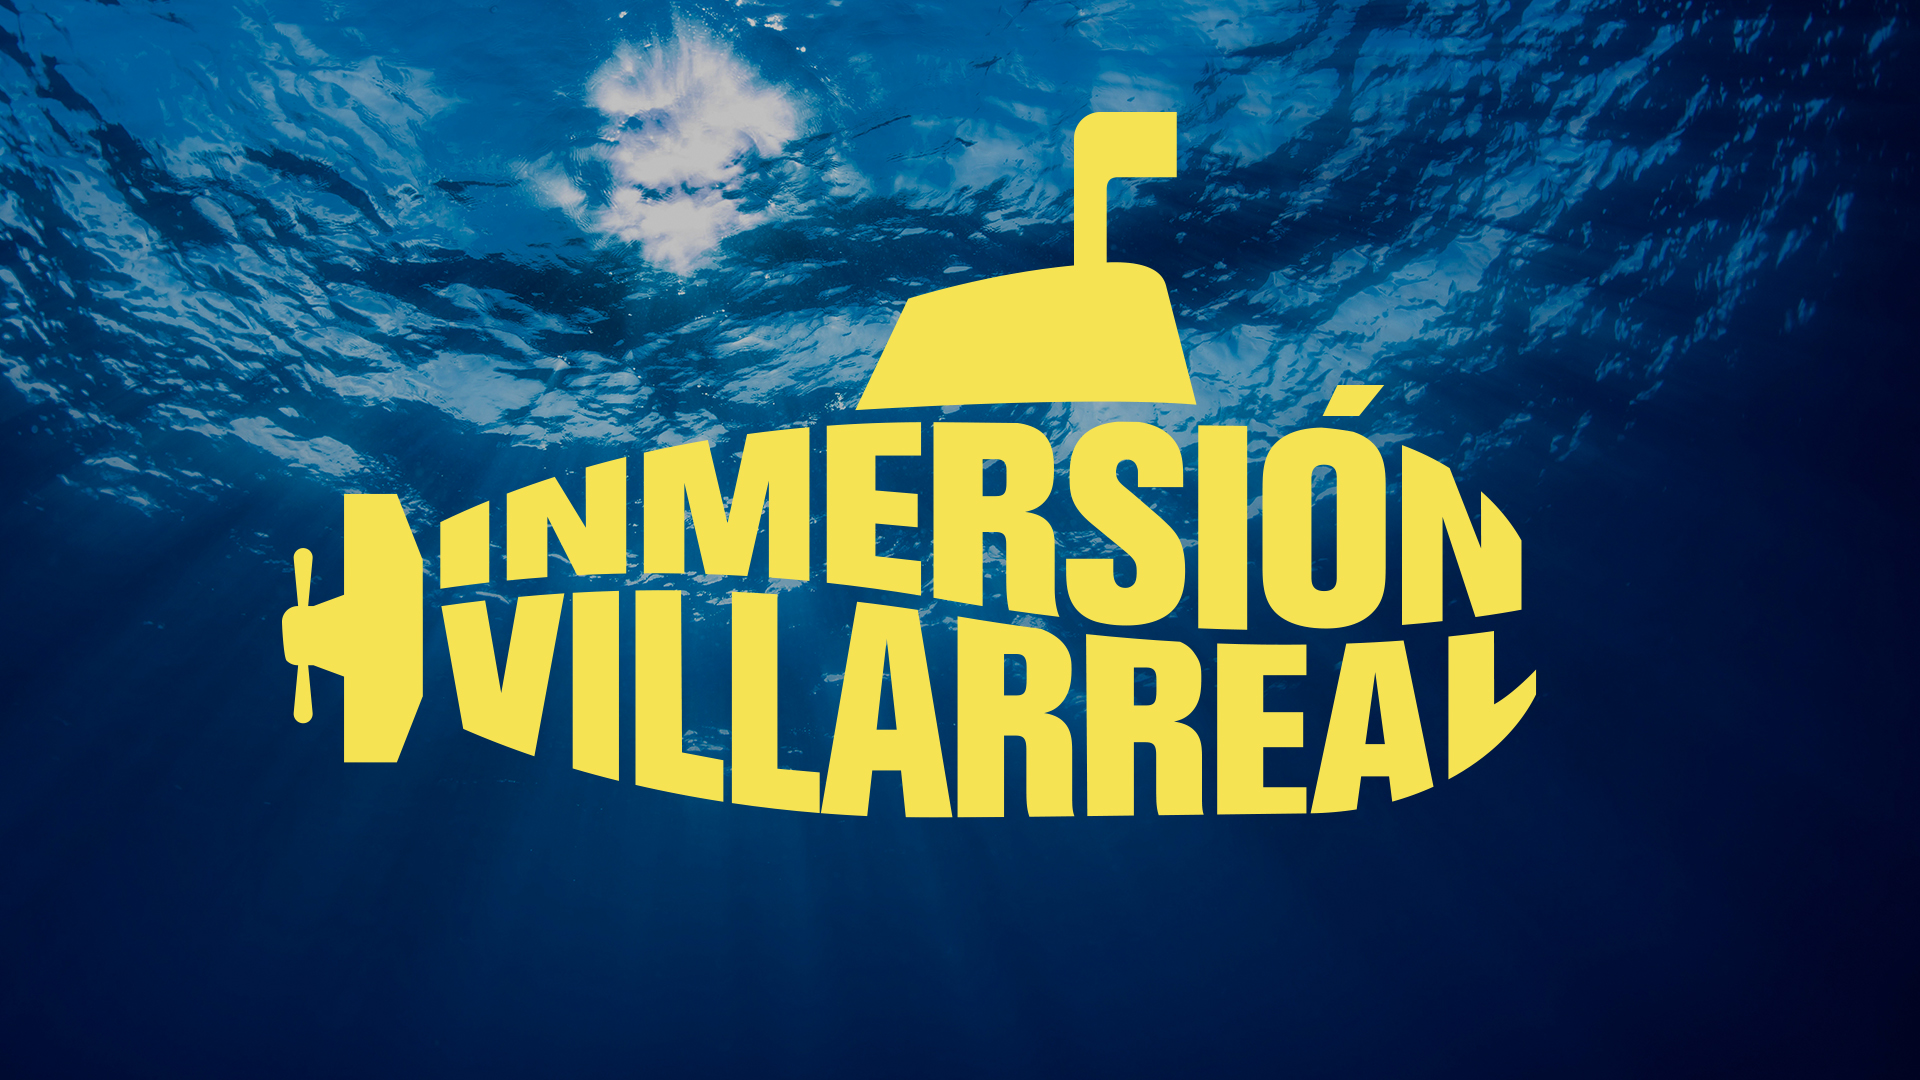 Inmersion Villarreal mar1080x1920 1